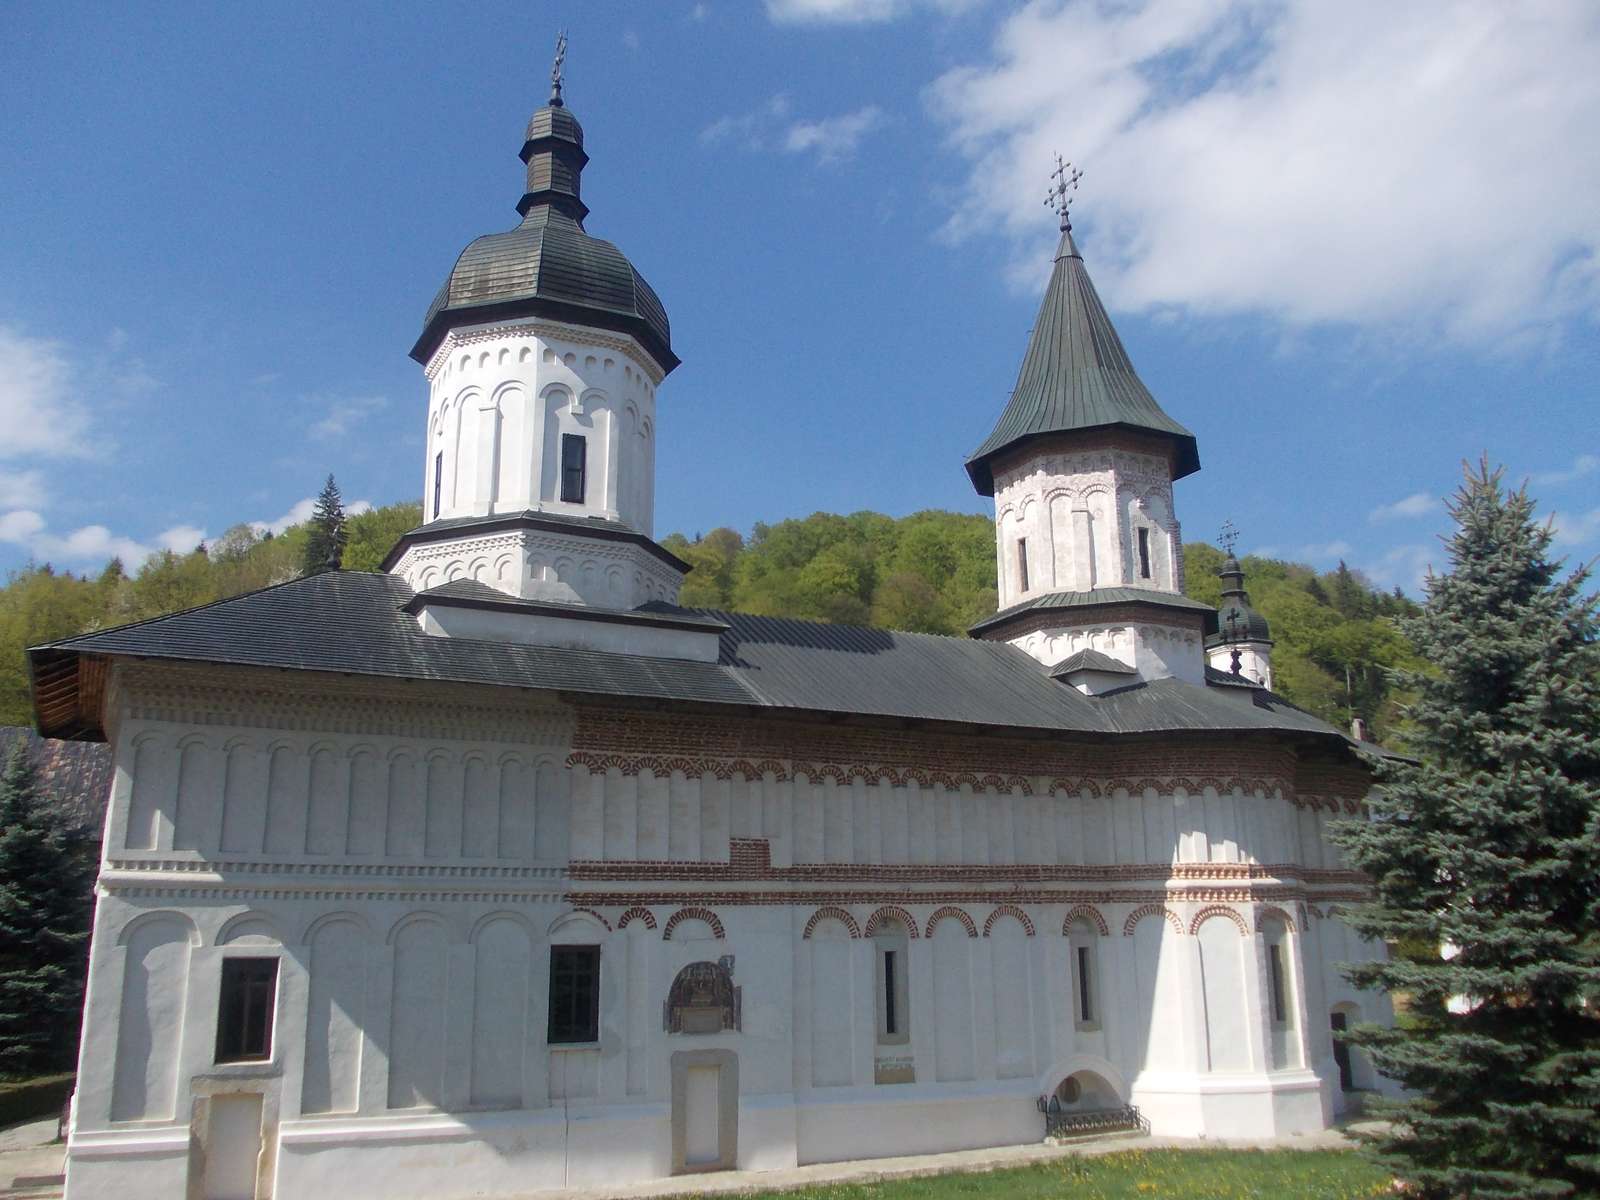 Mănăstirea Secu puzzel online van foto